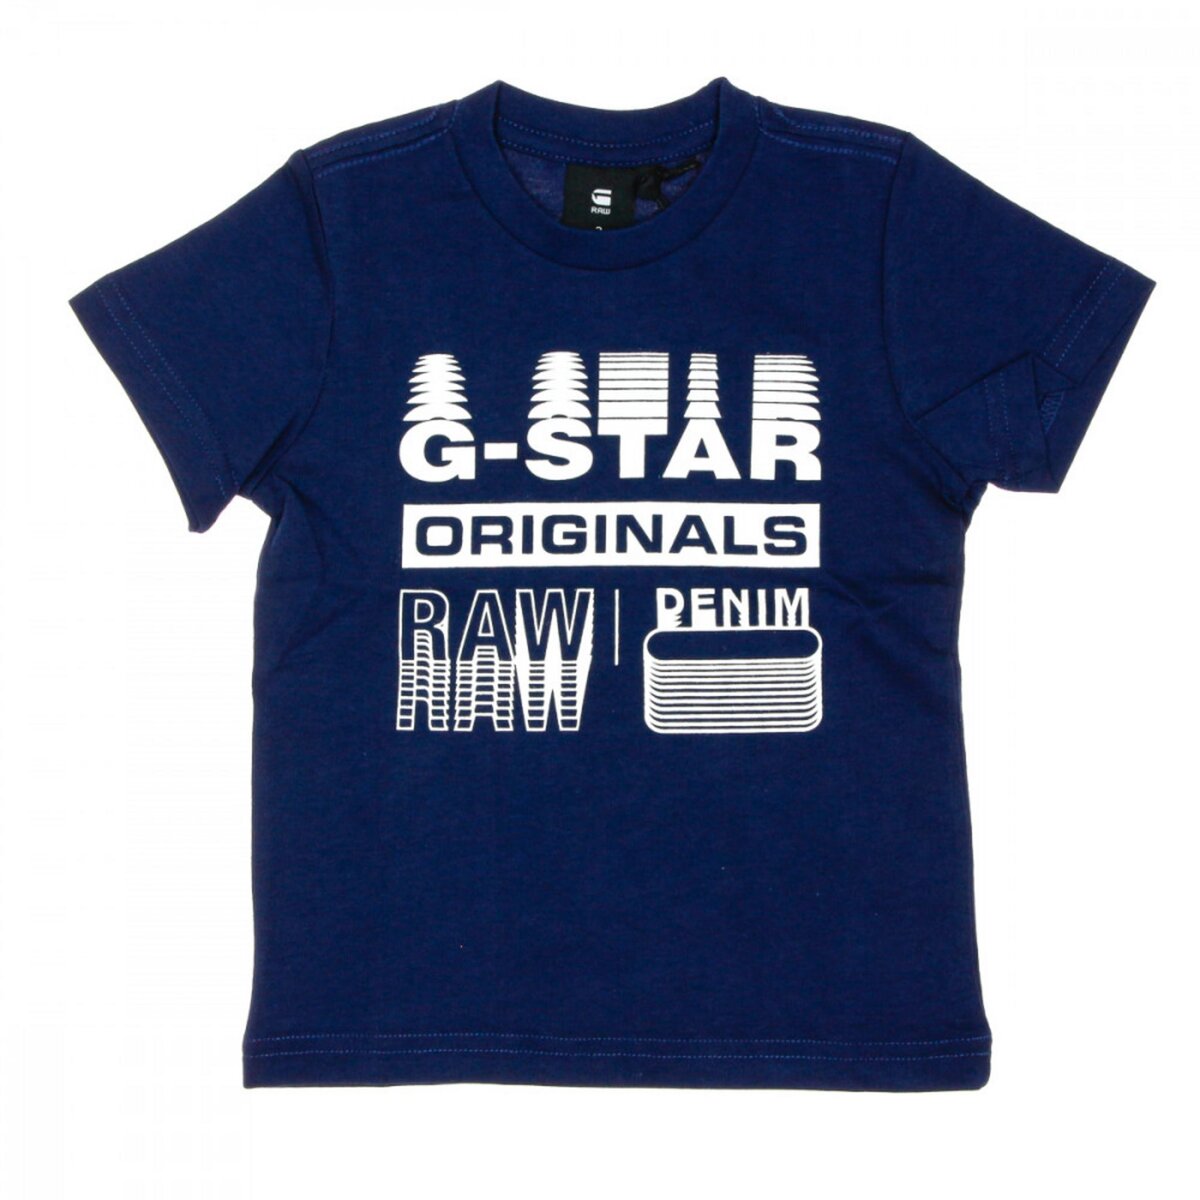  T-shirt Marine Garçon G-star Kids